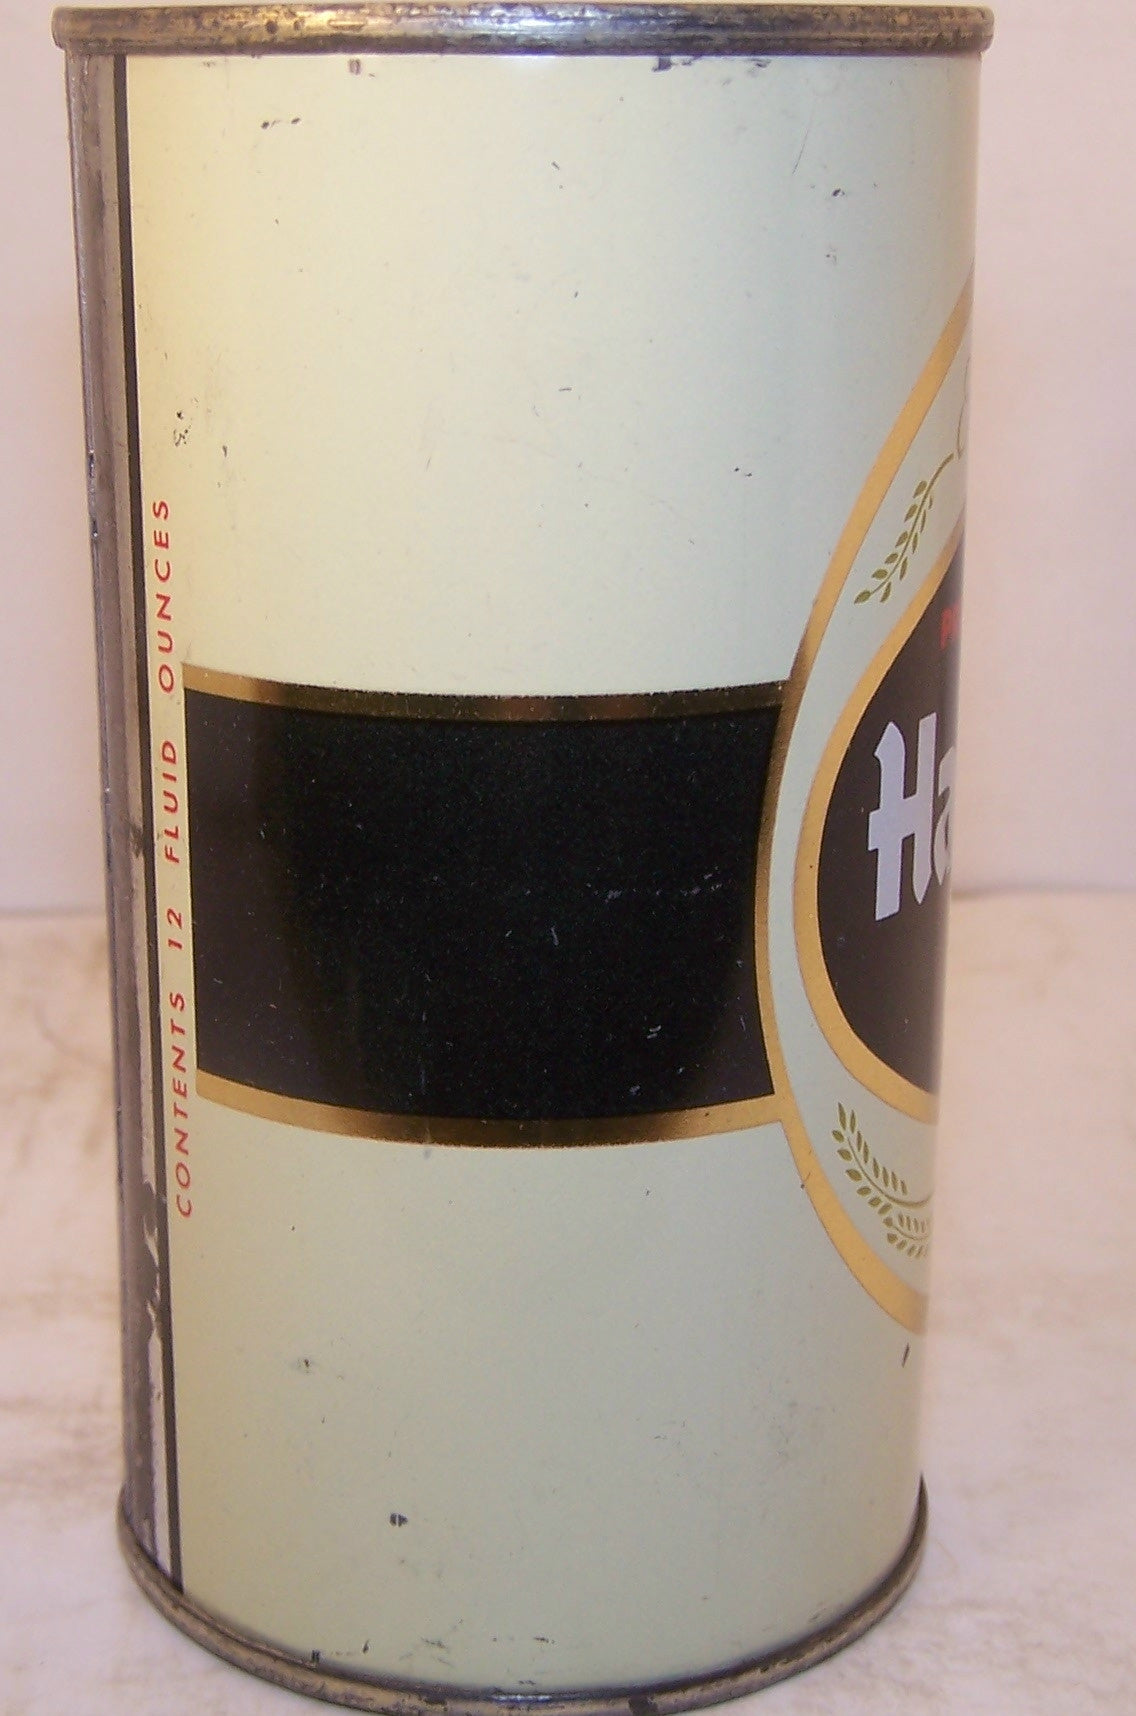 Hampden Beer, USBC 79-39, Grade 1 to 1/1+